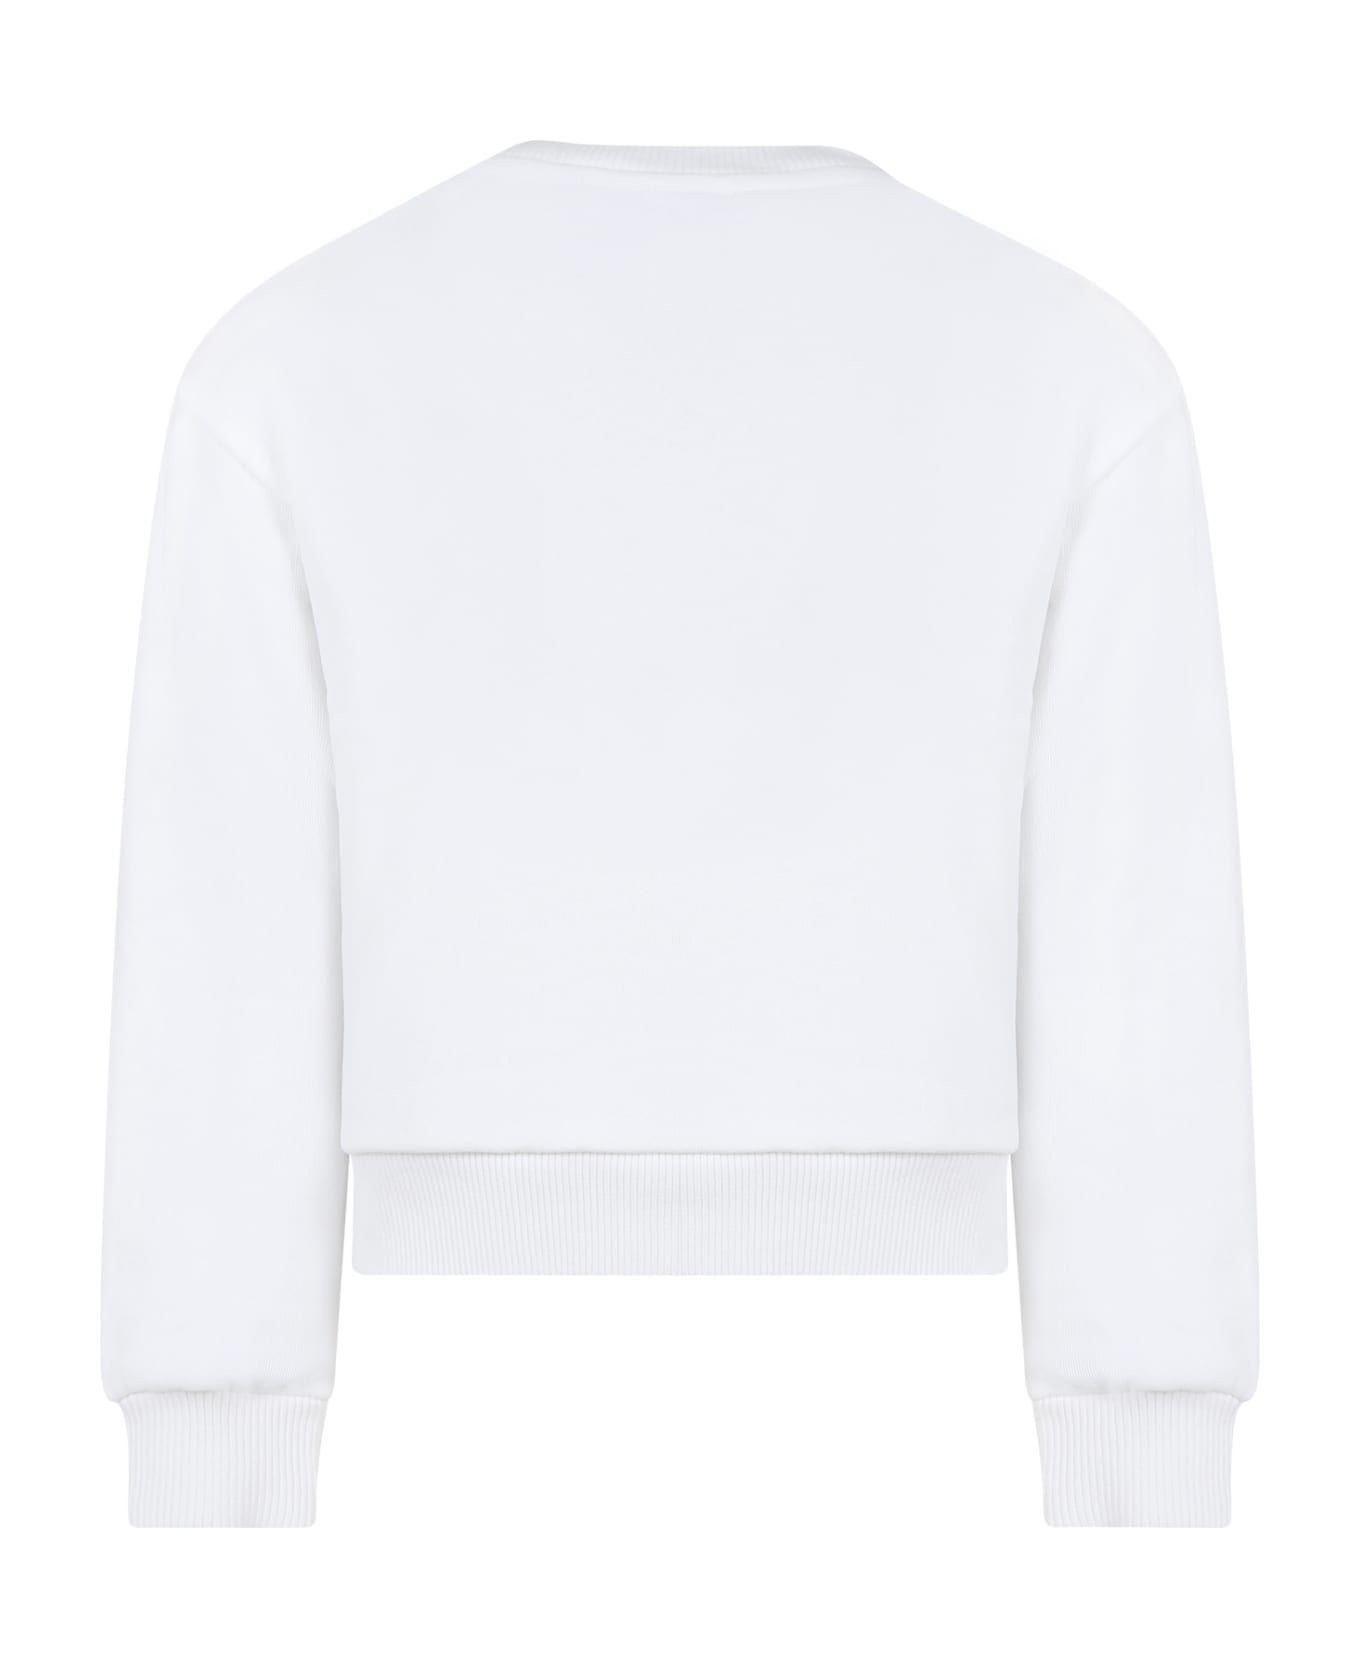 Dolce & Gabbana Whit Sweatshirt For Kids With Iconic Monogram - White